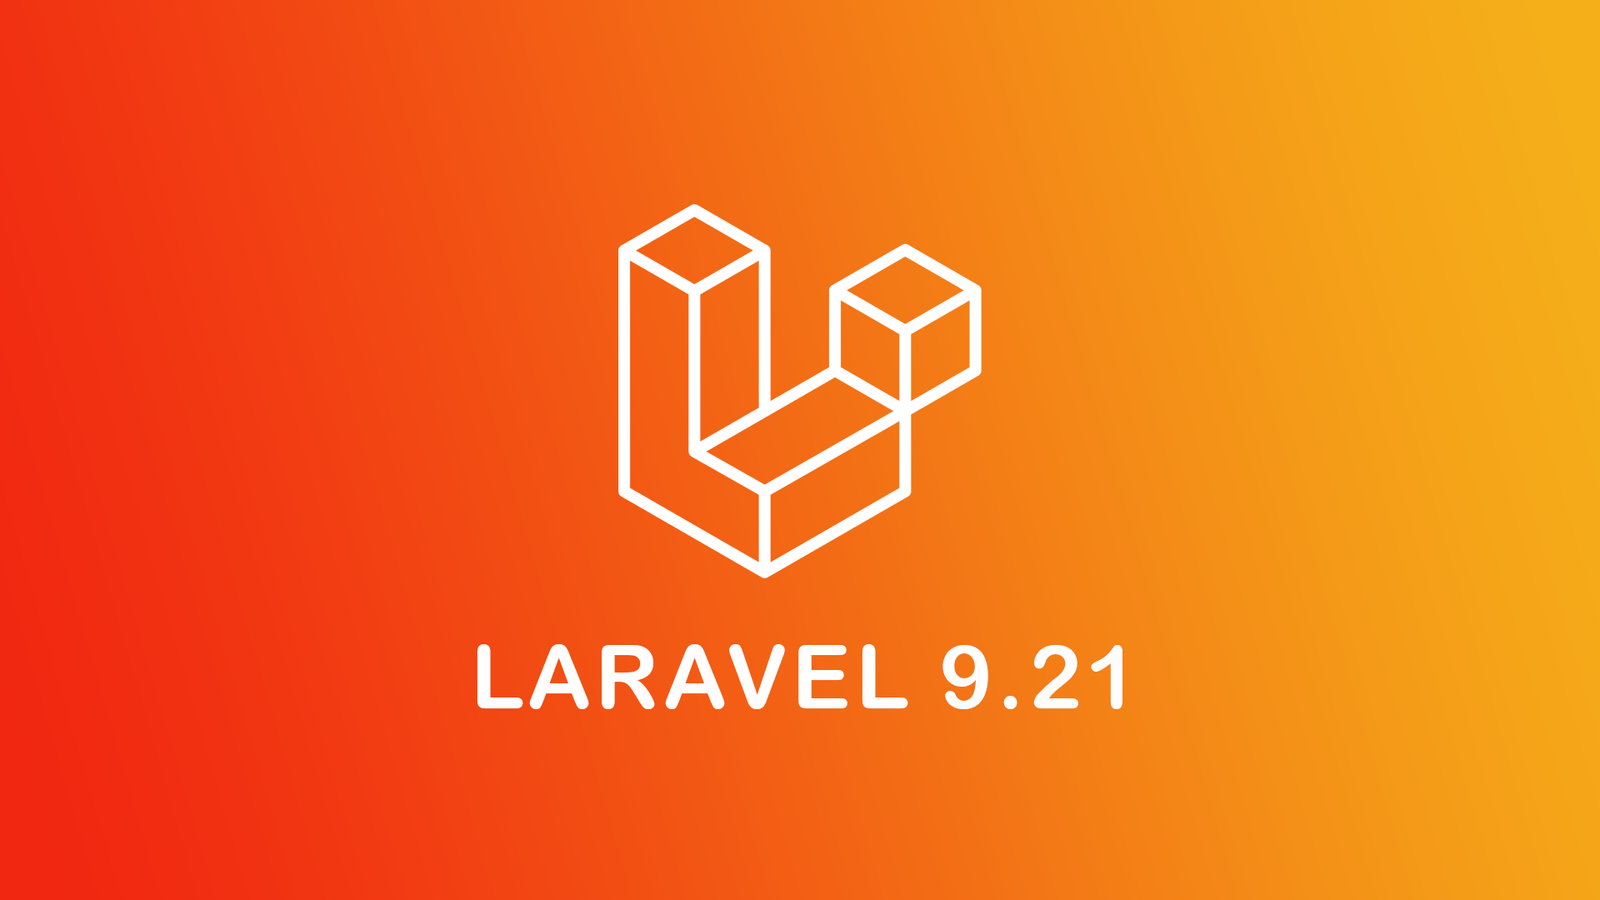 What Is Laravel ?